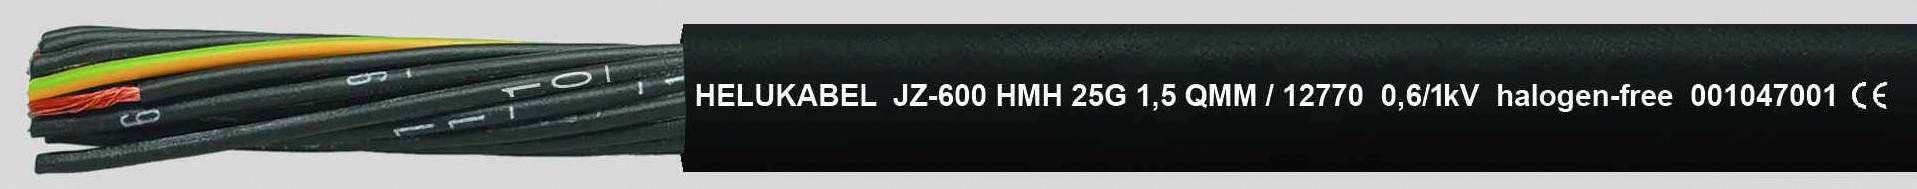 HELUKABEL JZ-500 HMH Steuerleitung 4 x 1.50 mm² Schwarz 12763-1000 1000 m